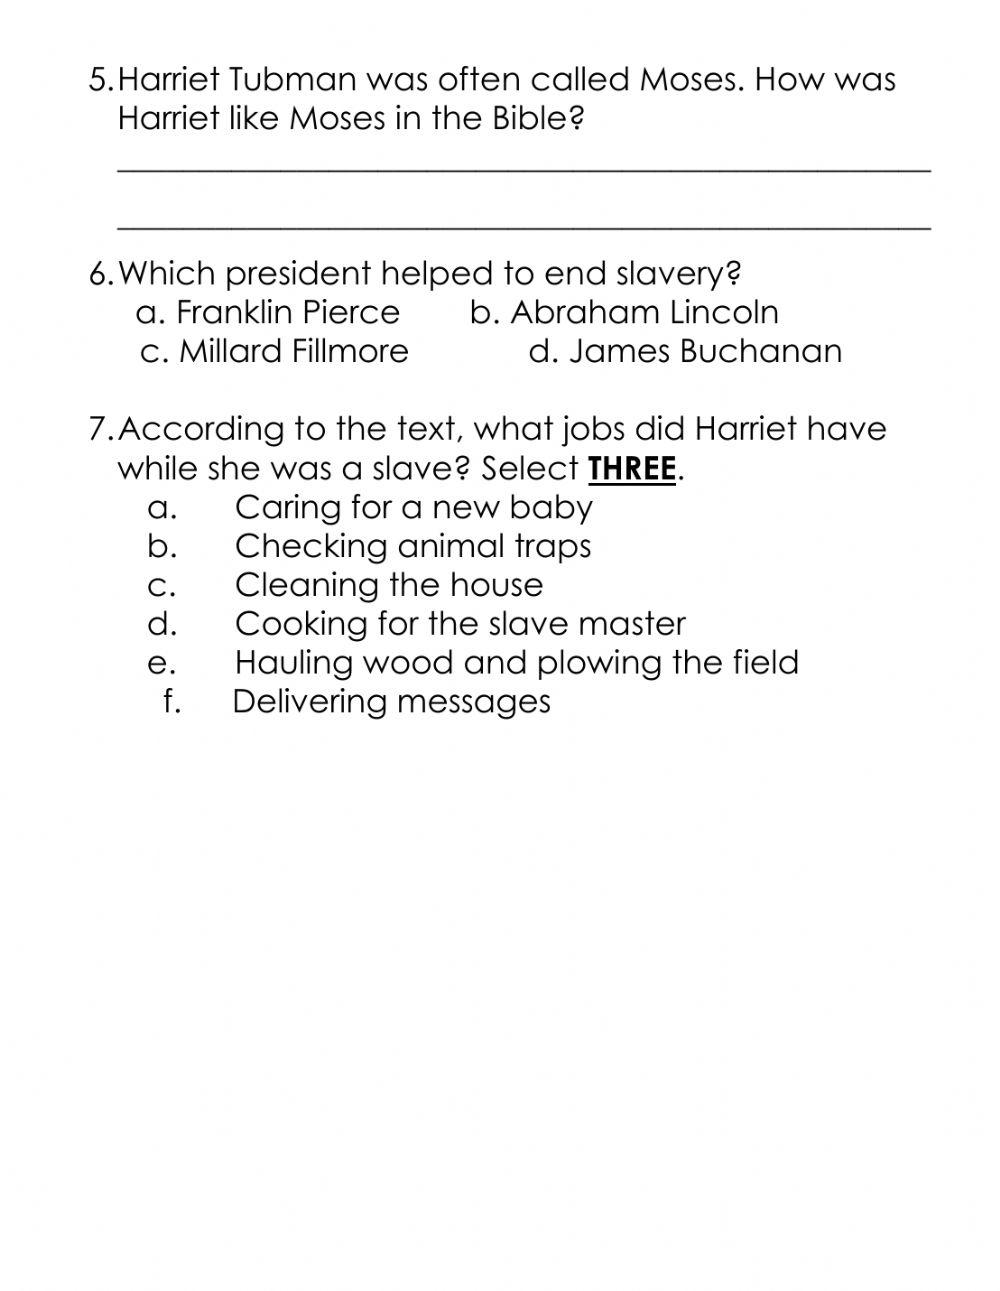 Harriet Tubman Comprehension Quiz